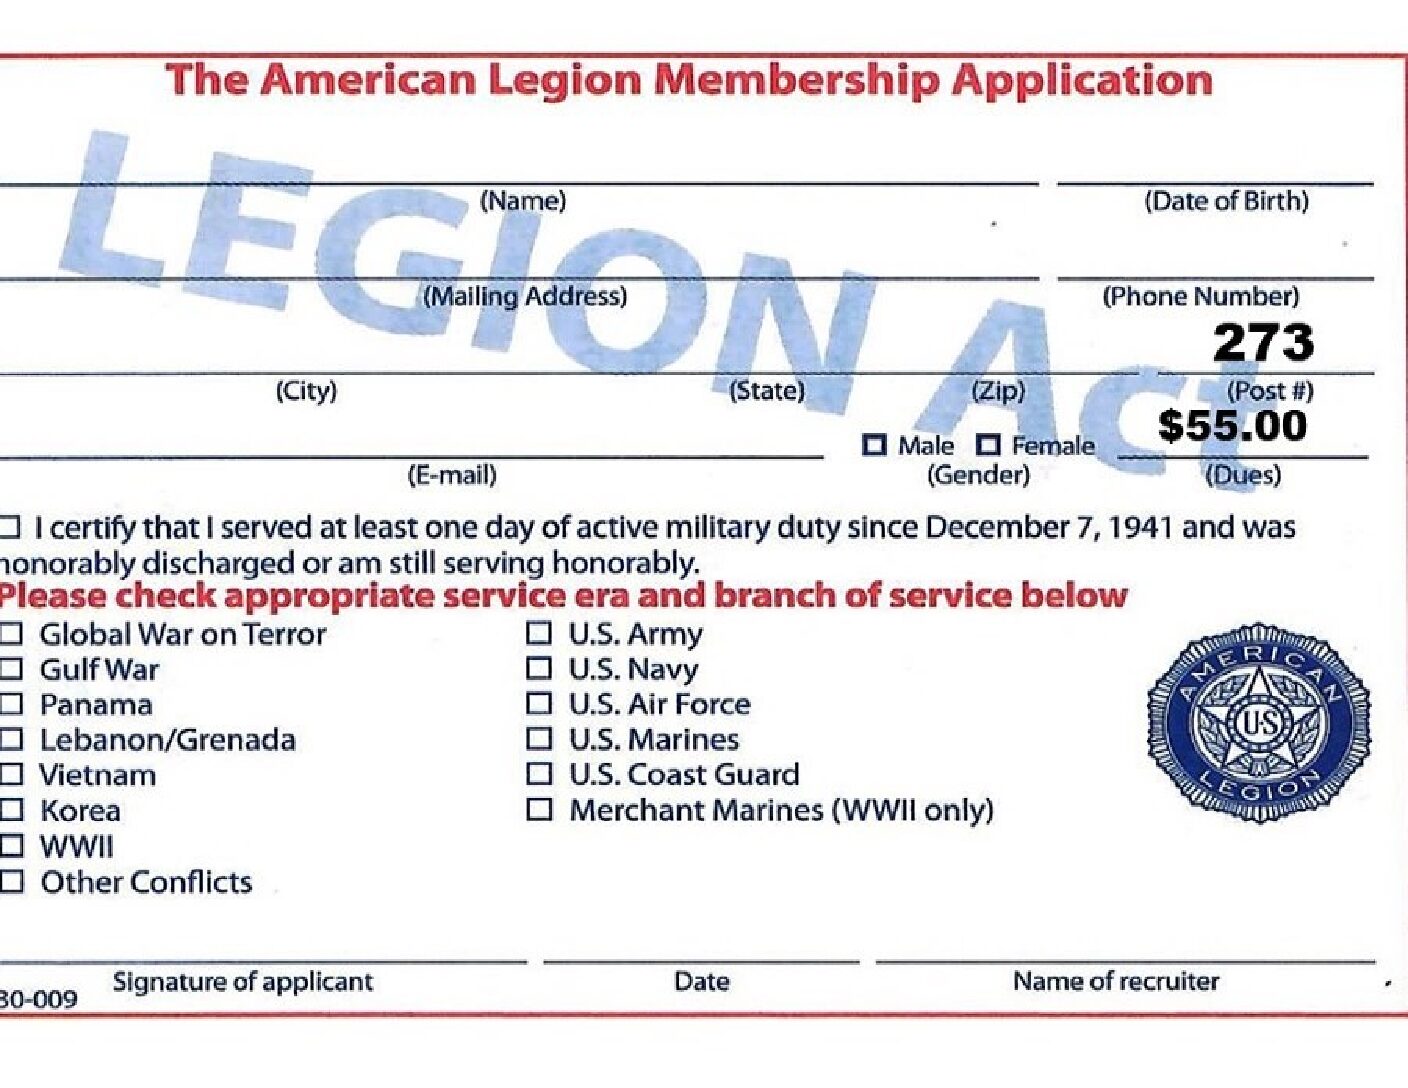 Membership American Legion Post 273